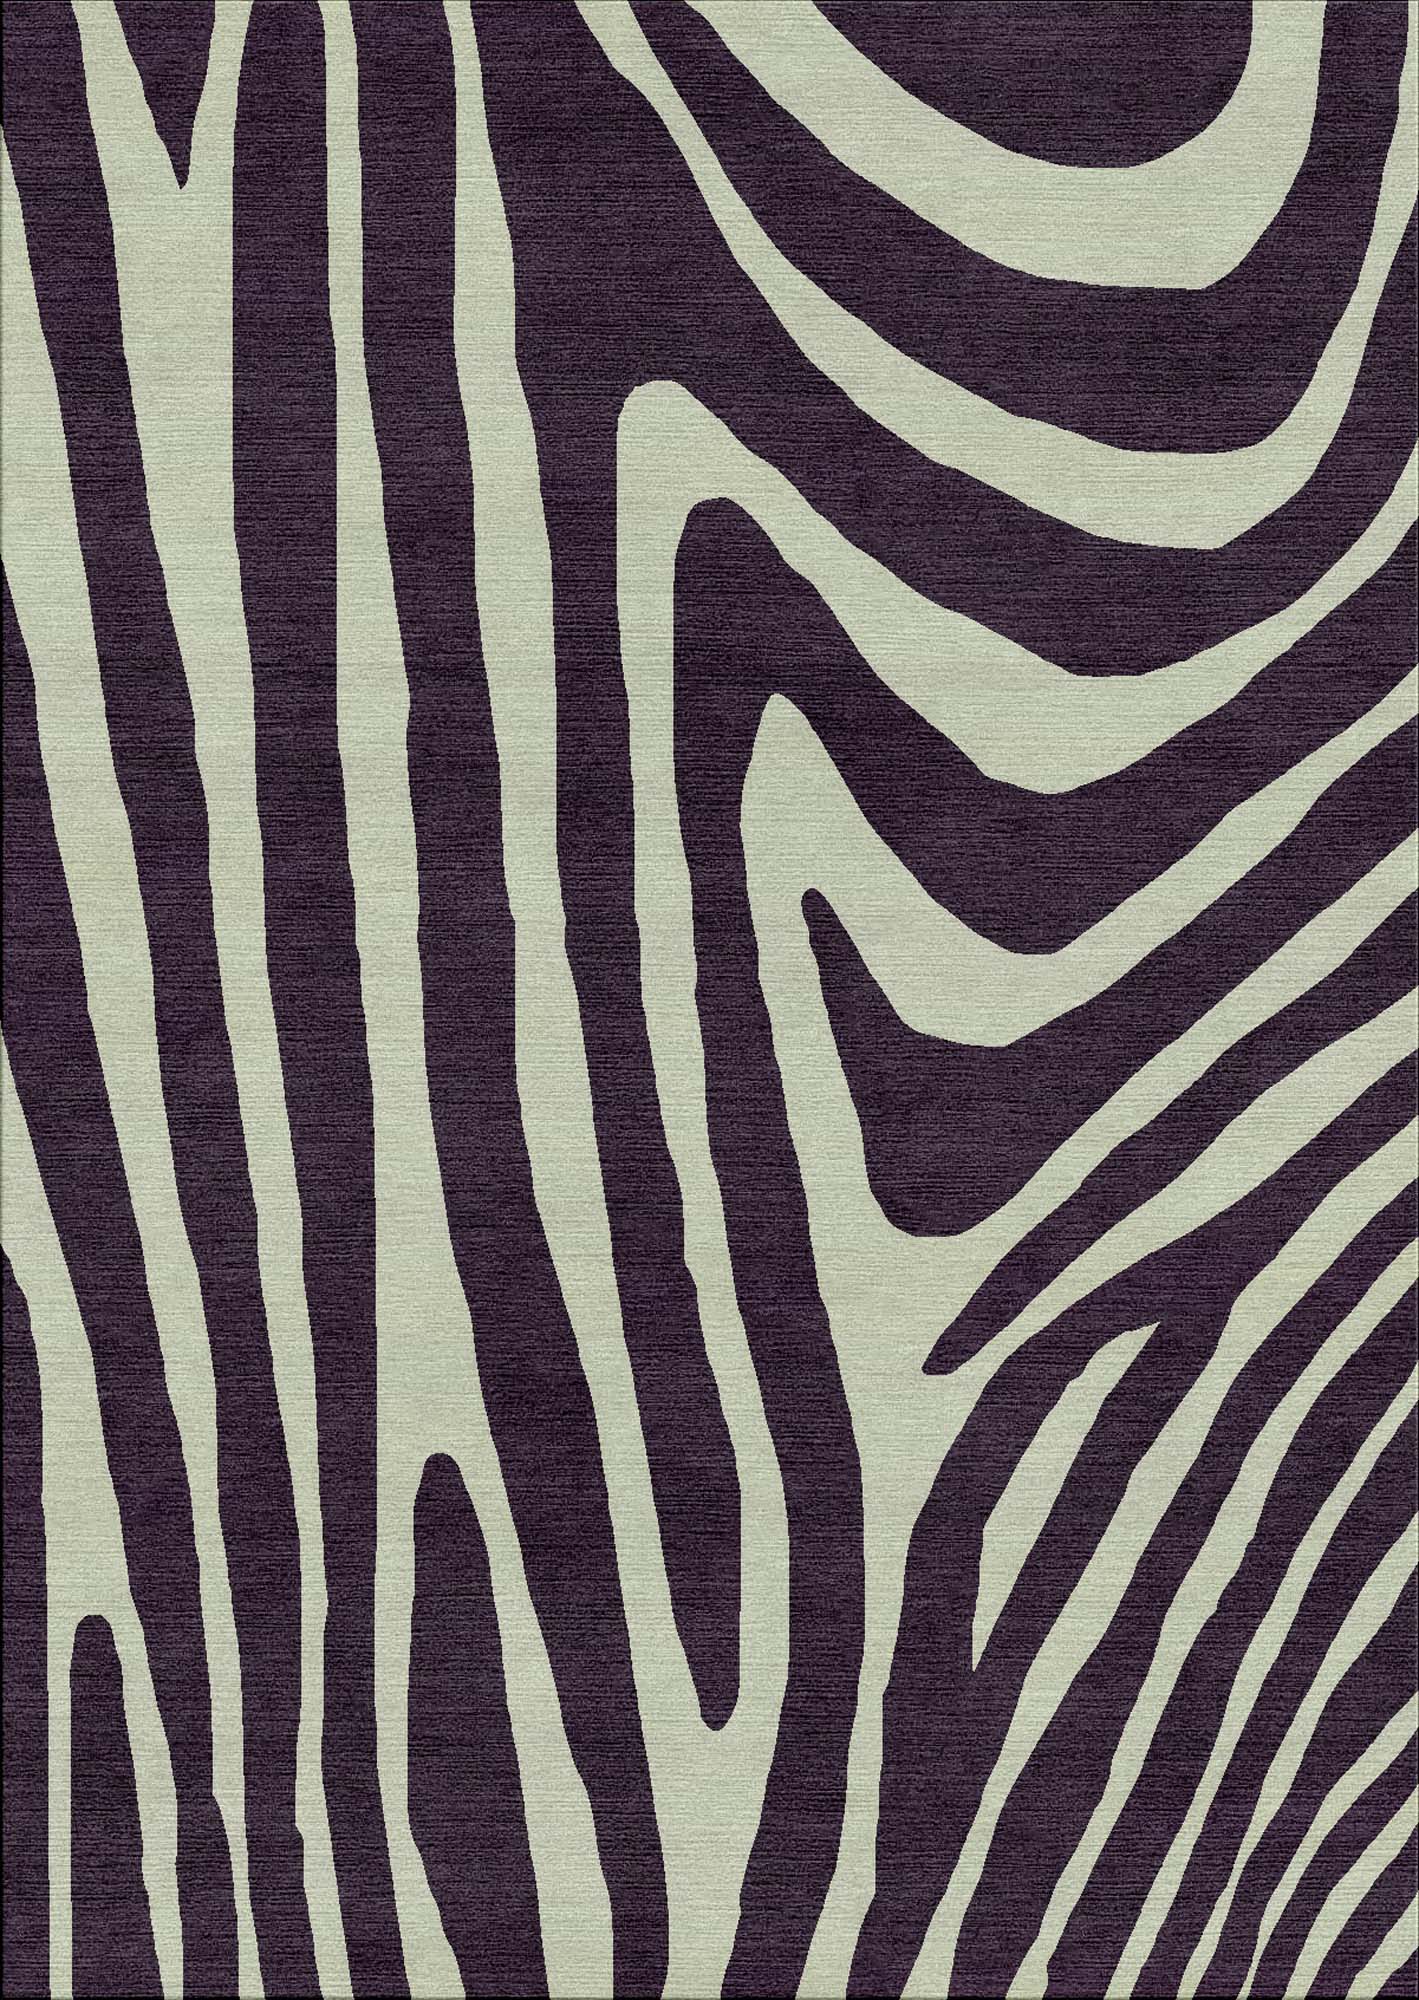 Cadrys Animals Zebra I Purple